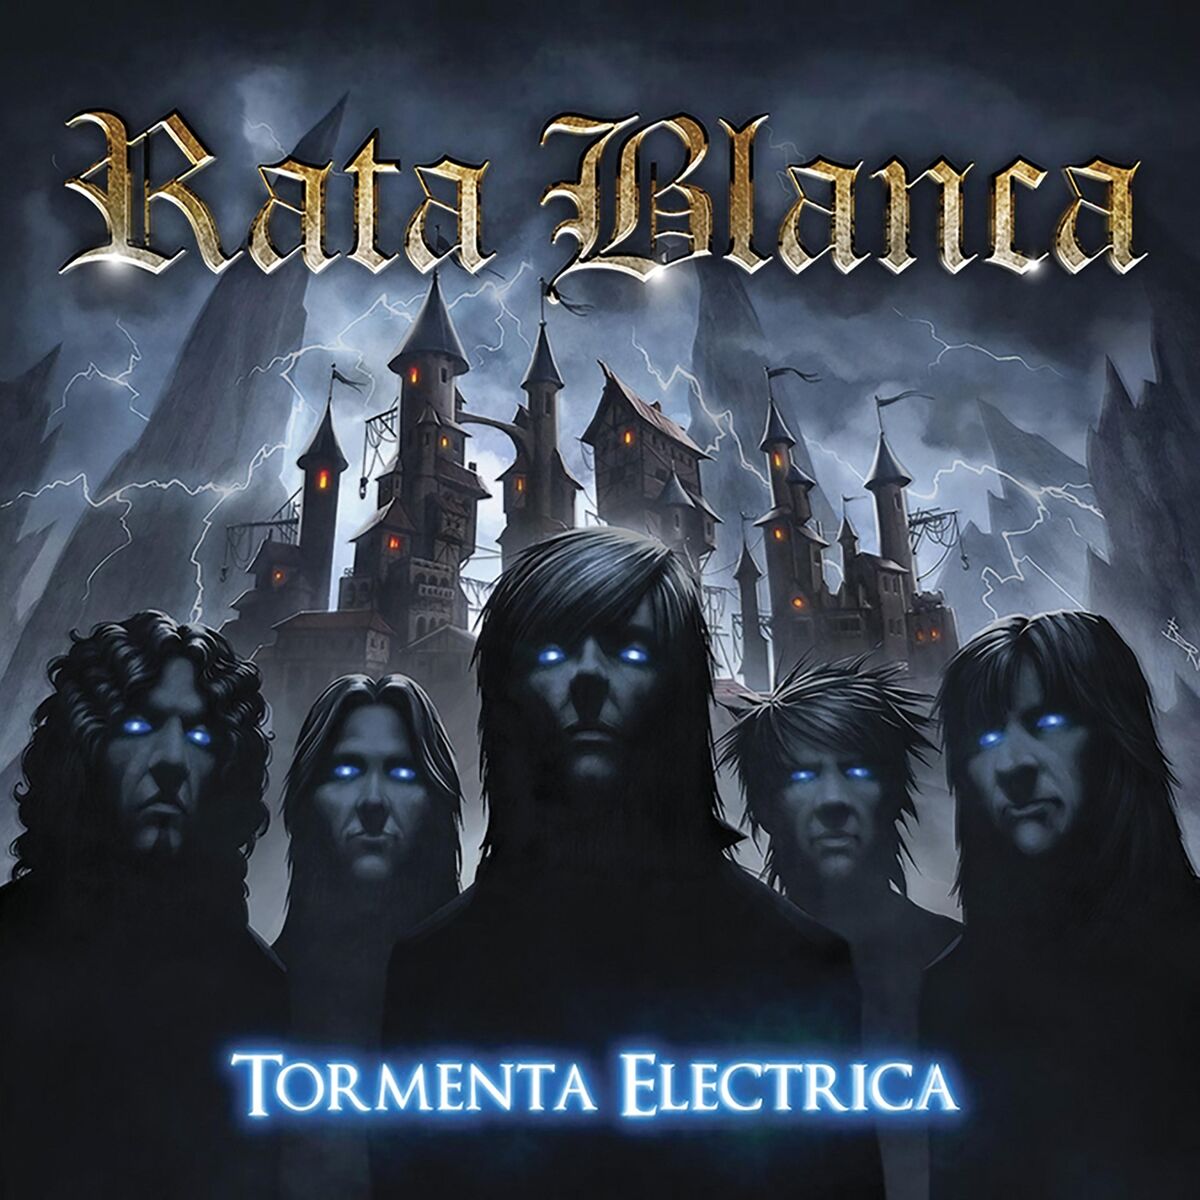 Rata Blanca: albums